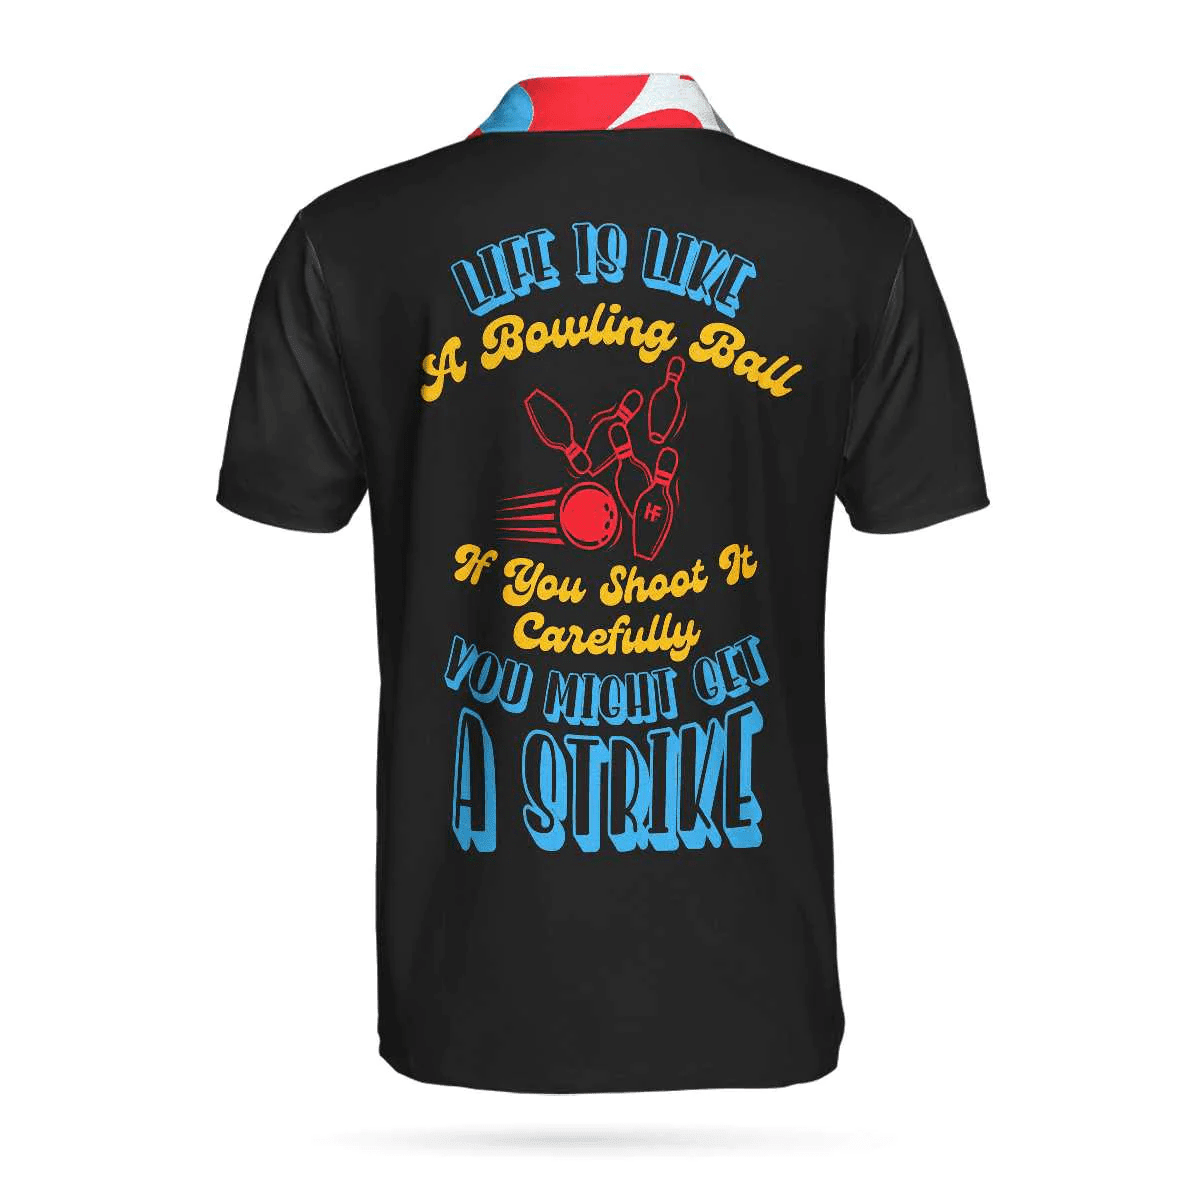 Life Is Like A Bowling Ball Polo Shirt, Colorful tenpin Bowling Shirt For Men, Gift Idea For Bowling Lovers